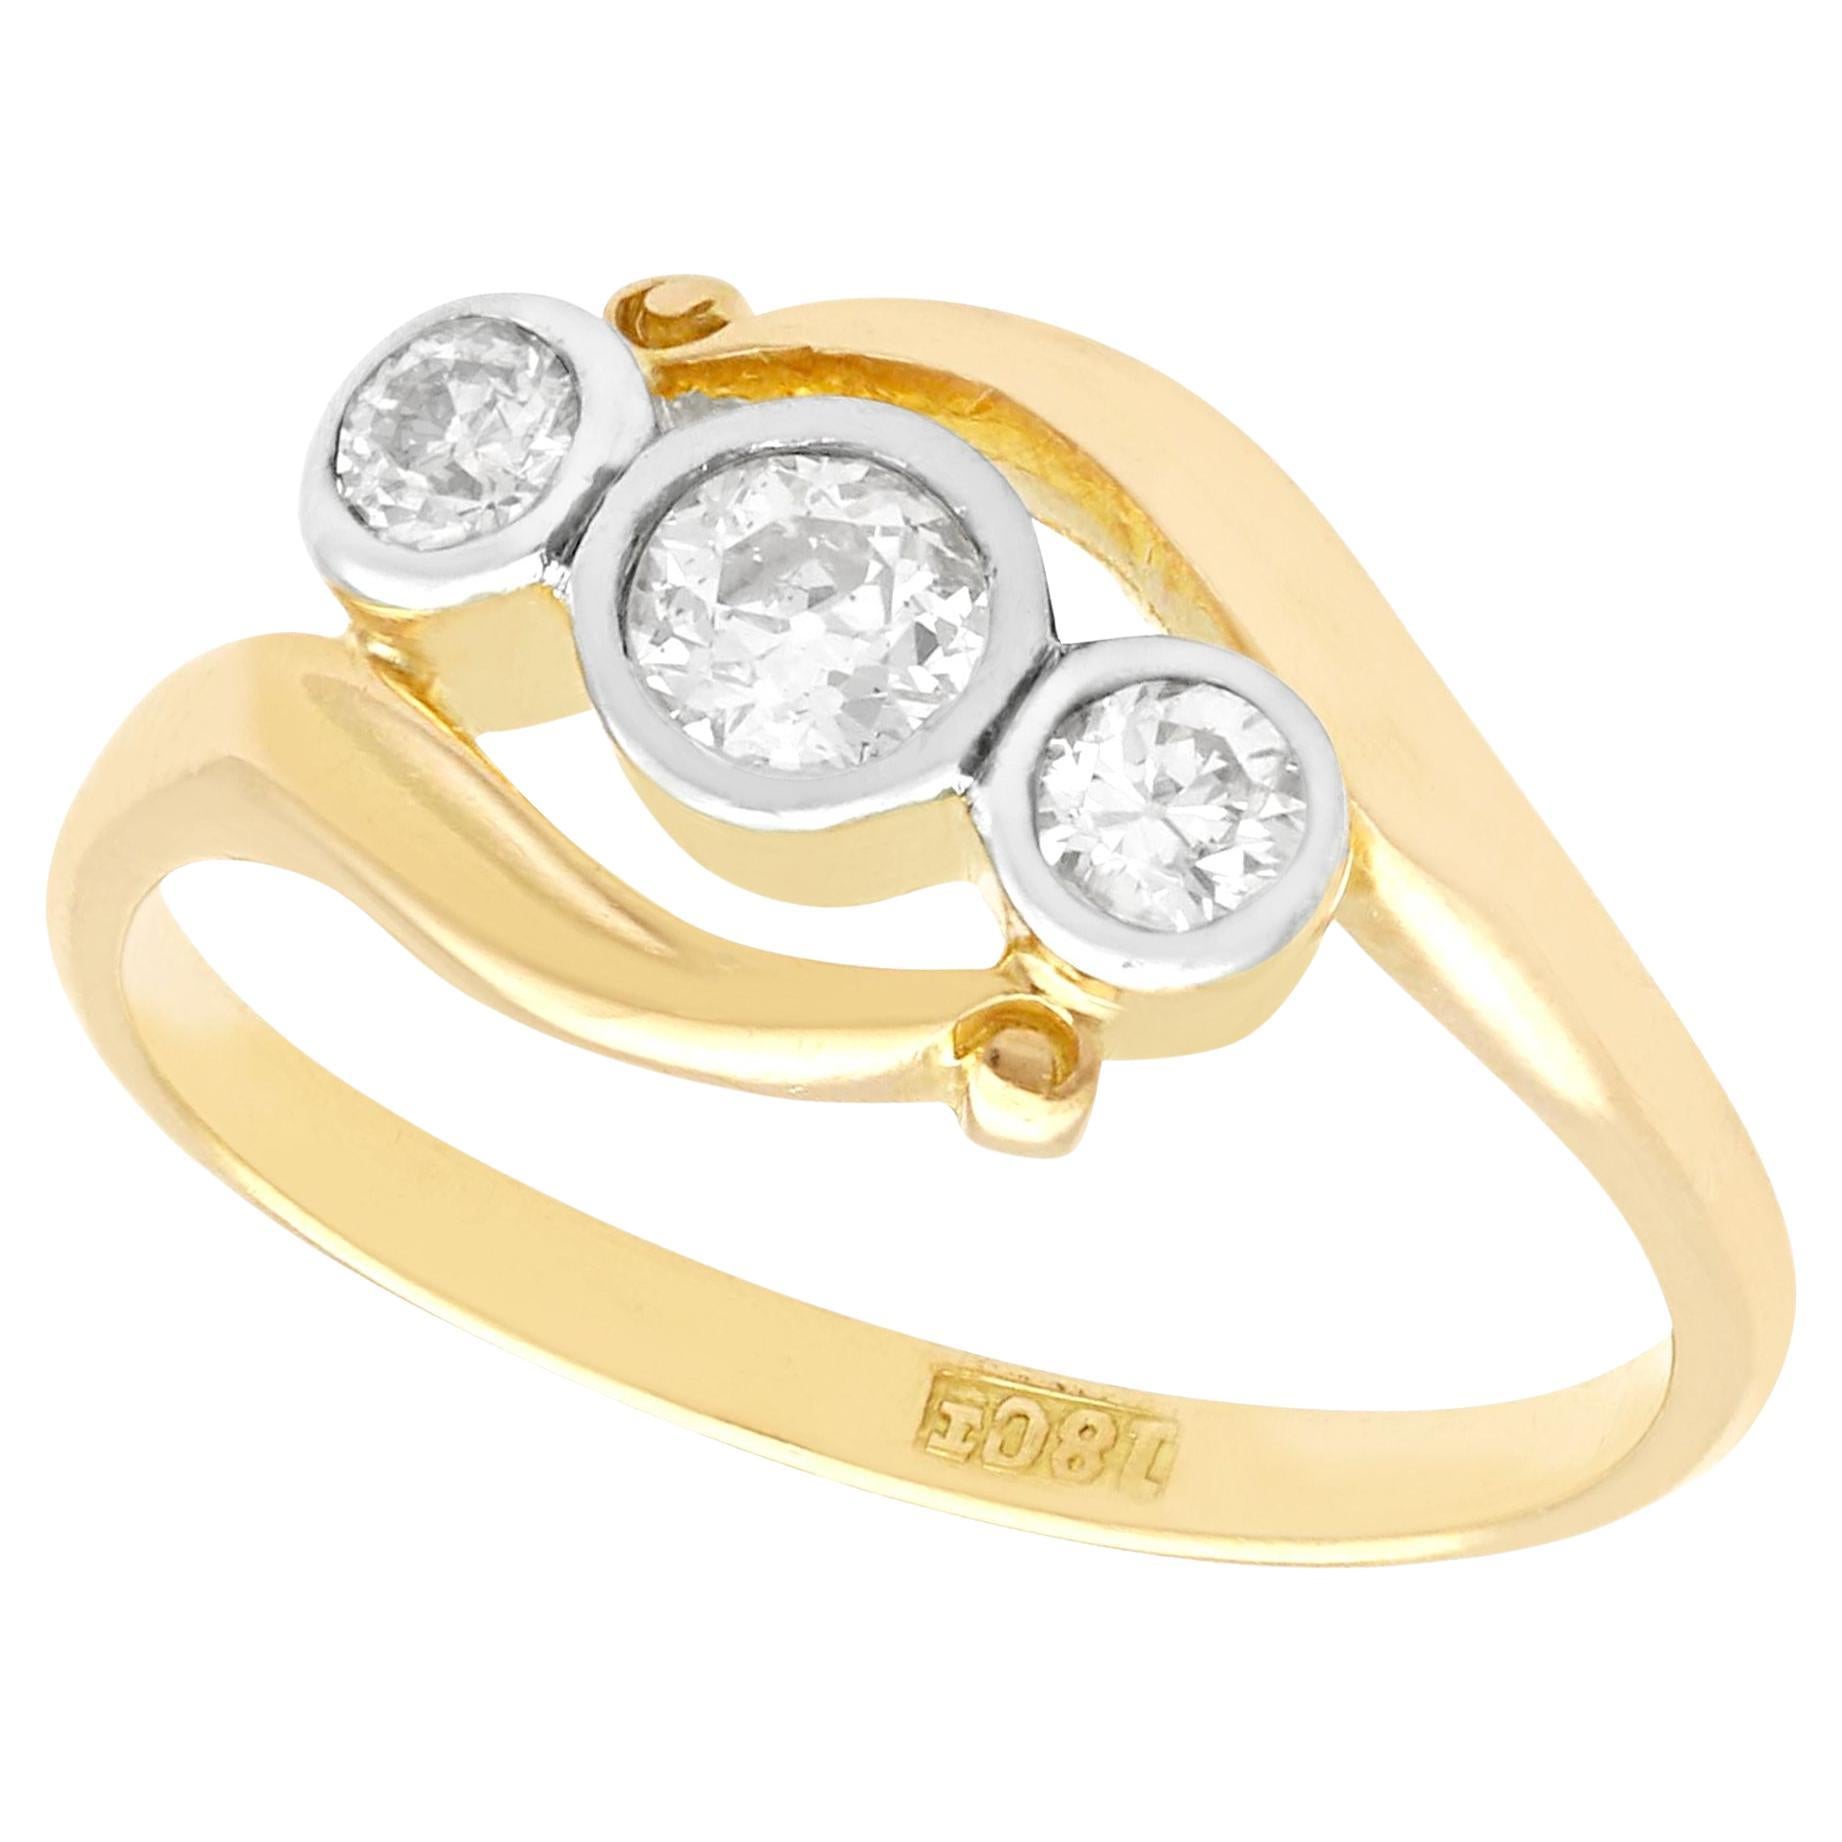 1930s 0.58 Carat Diamond Yellow Gold Cocktail Ring